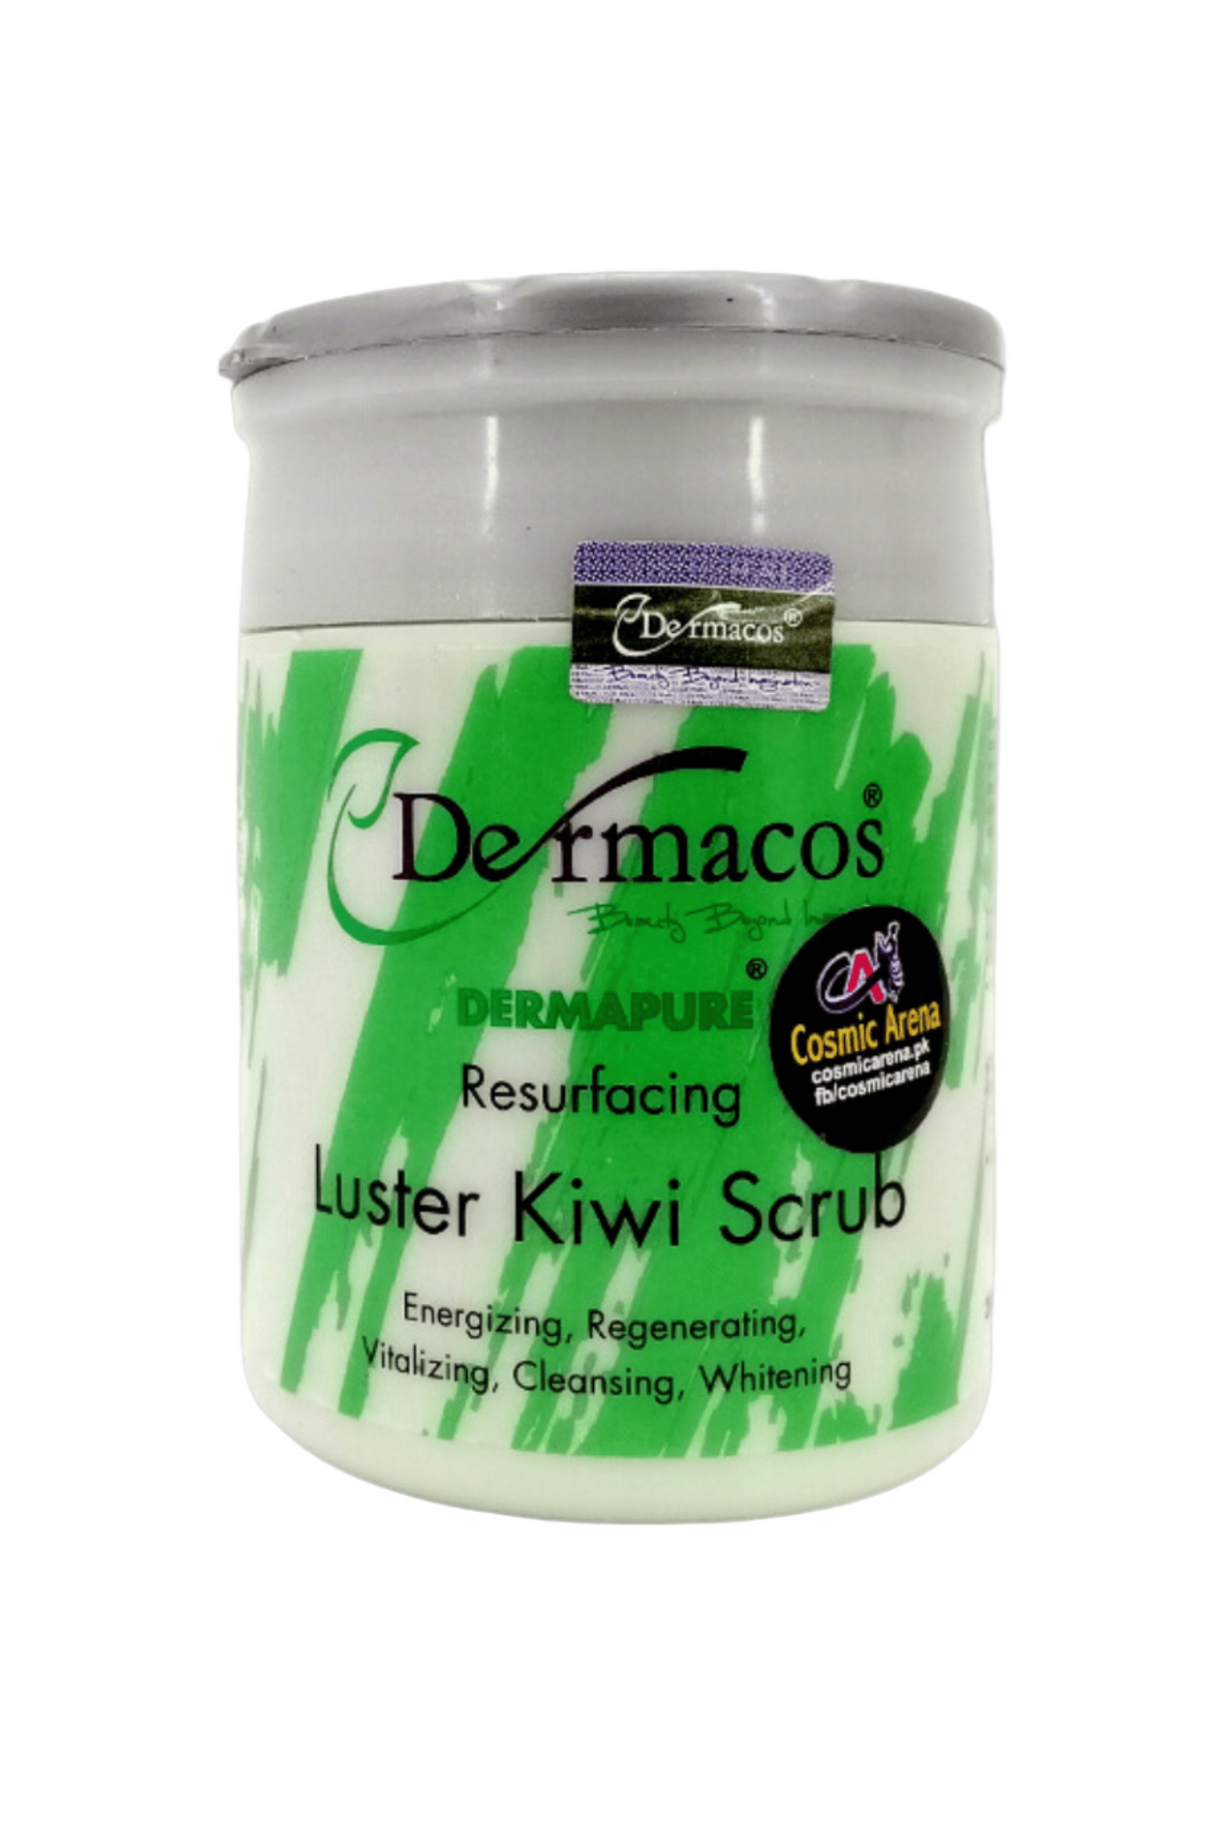 dermacos luster kiwi scrub 200g